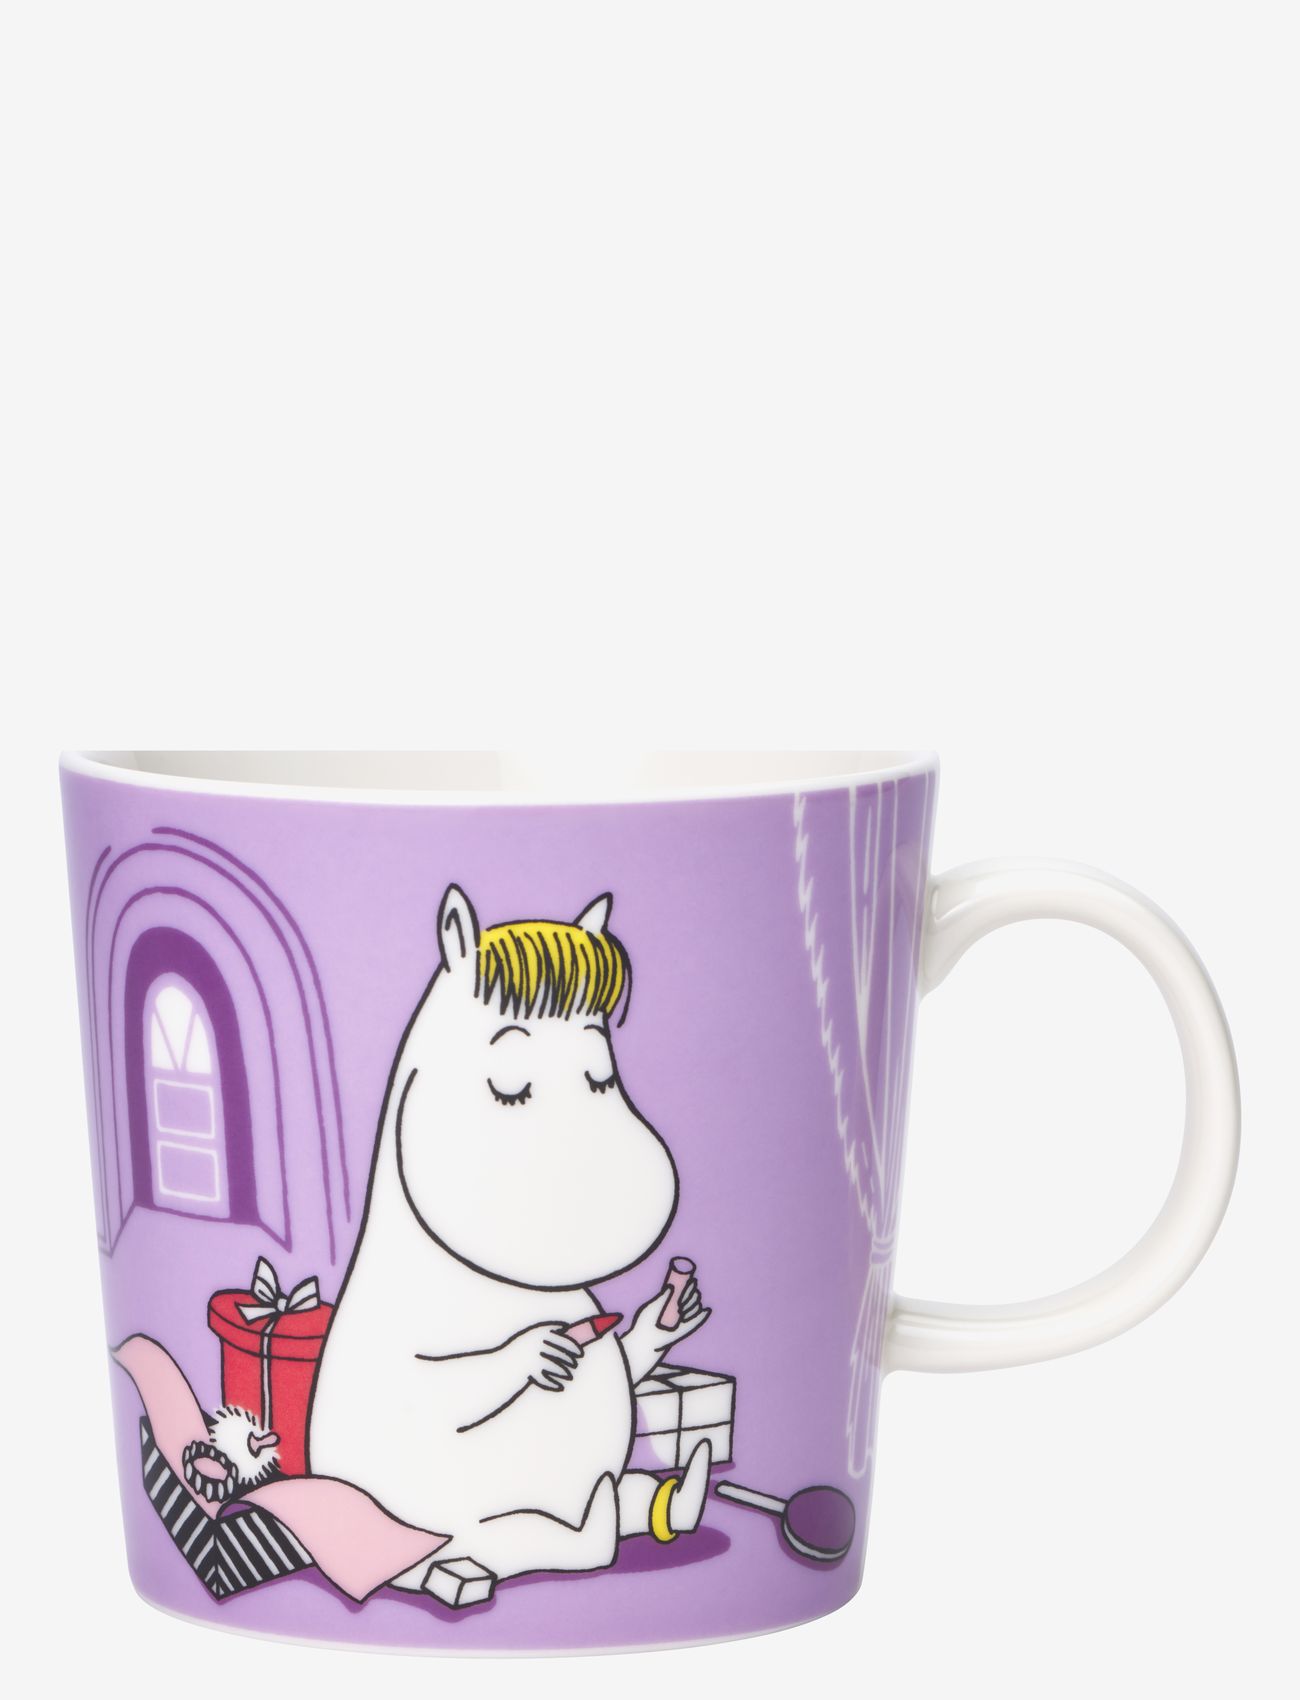 Arabia - Moomin mug 0,3L Snorkmaiden - lowest prices - purple - 1